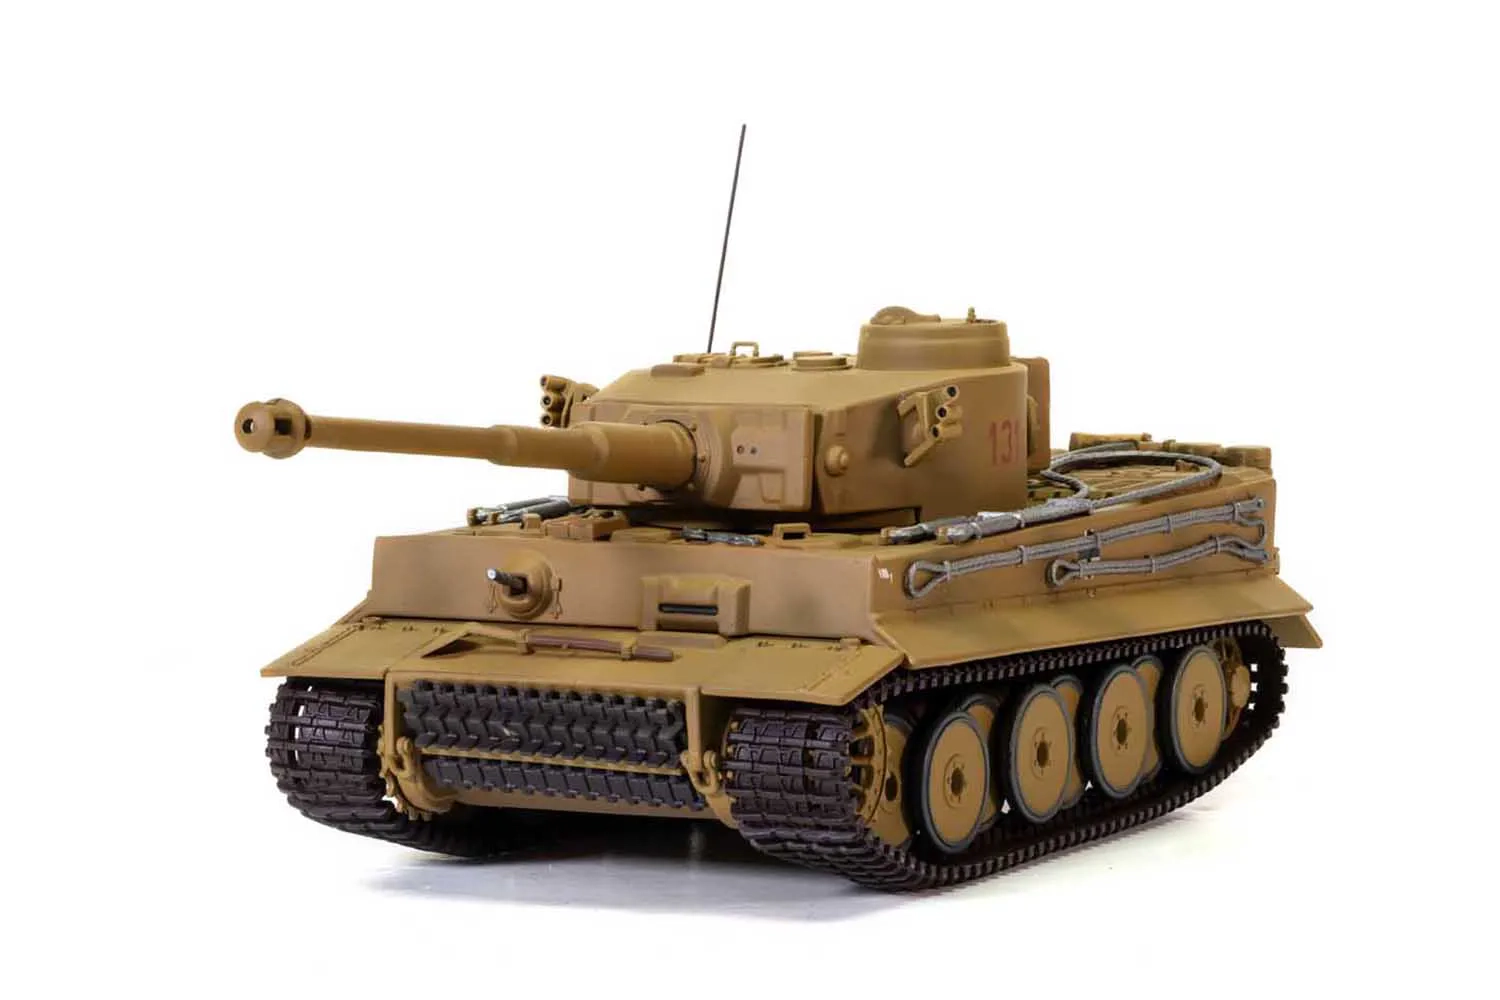 Panzerkampfwagen VI Tiger Ausf E - Tiger 131 - Tunisia